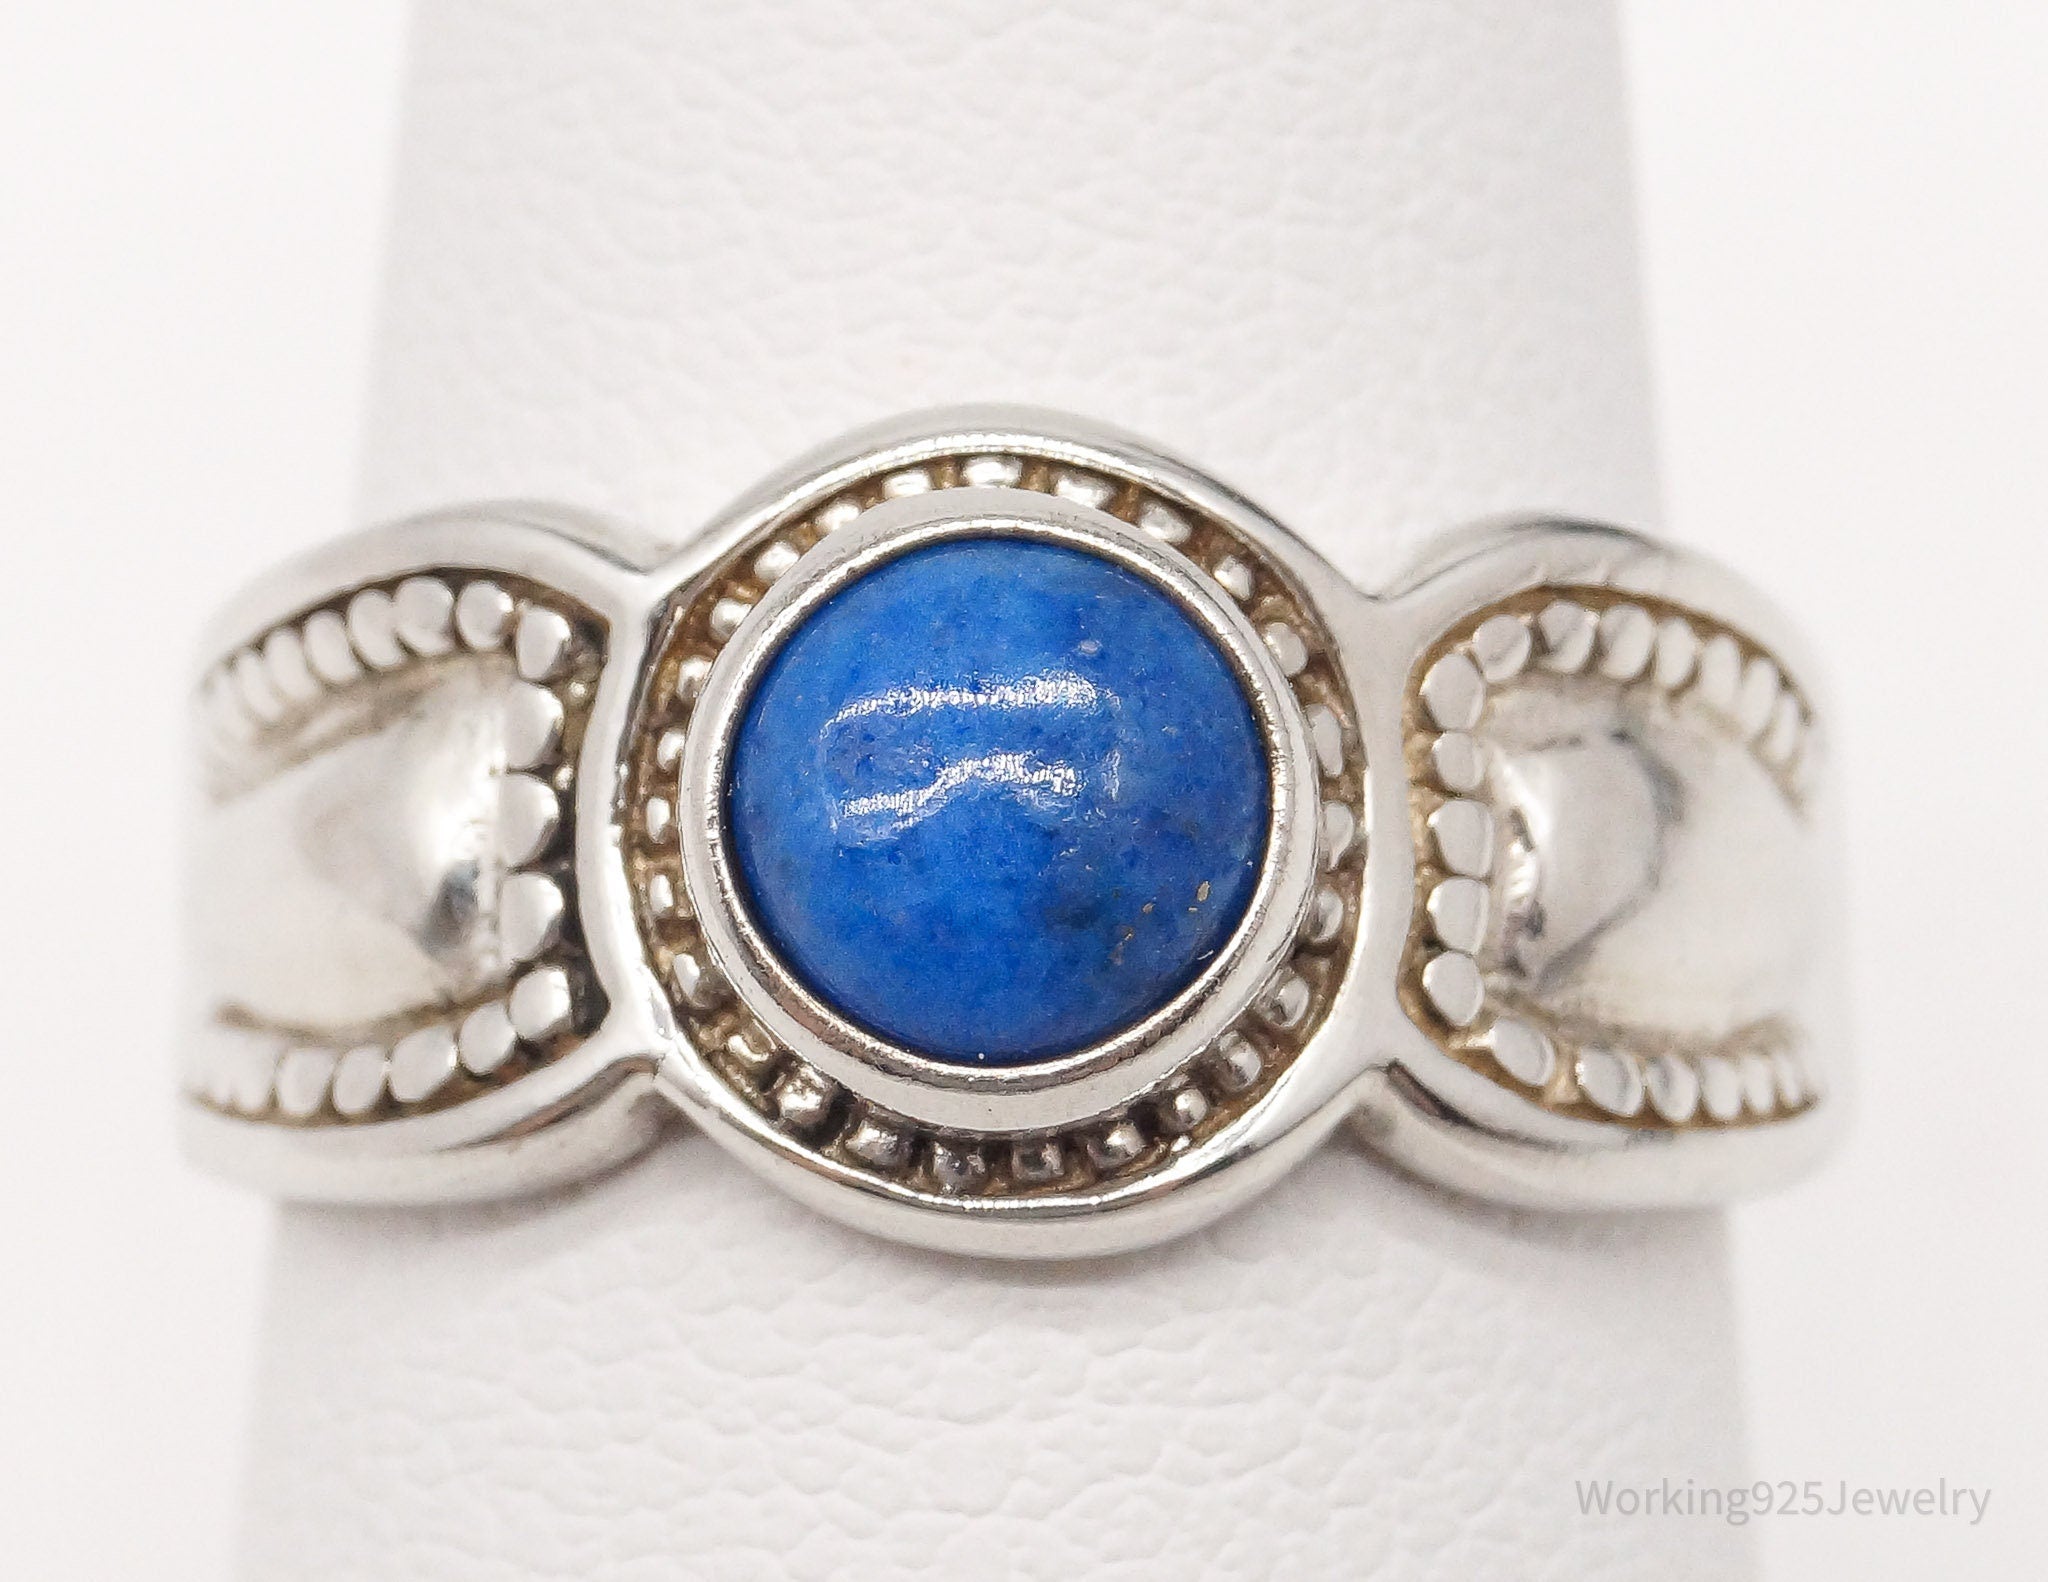 Vintage Lapis Lazuli Sterling Silver Ring - Size 6